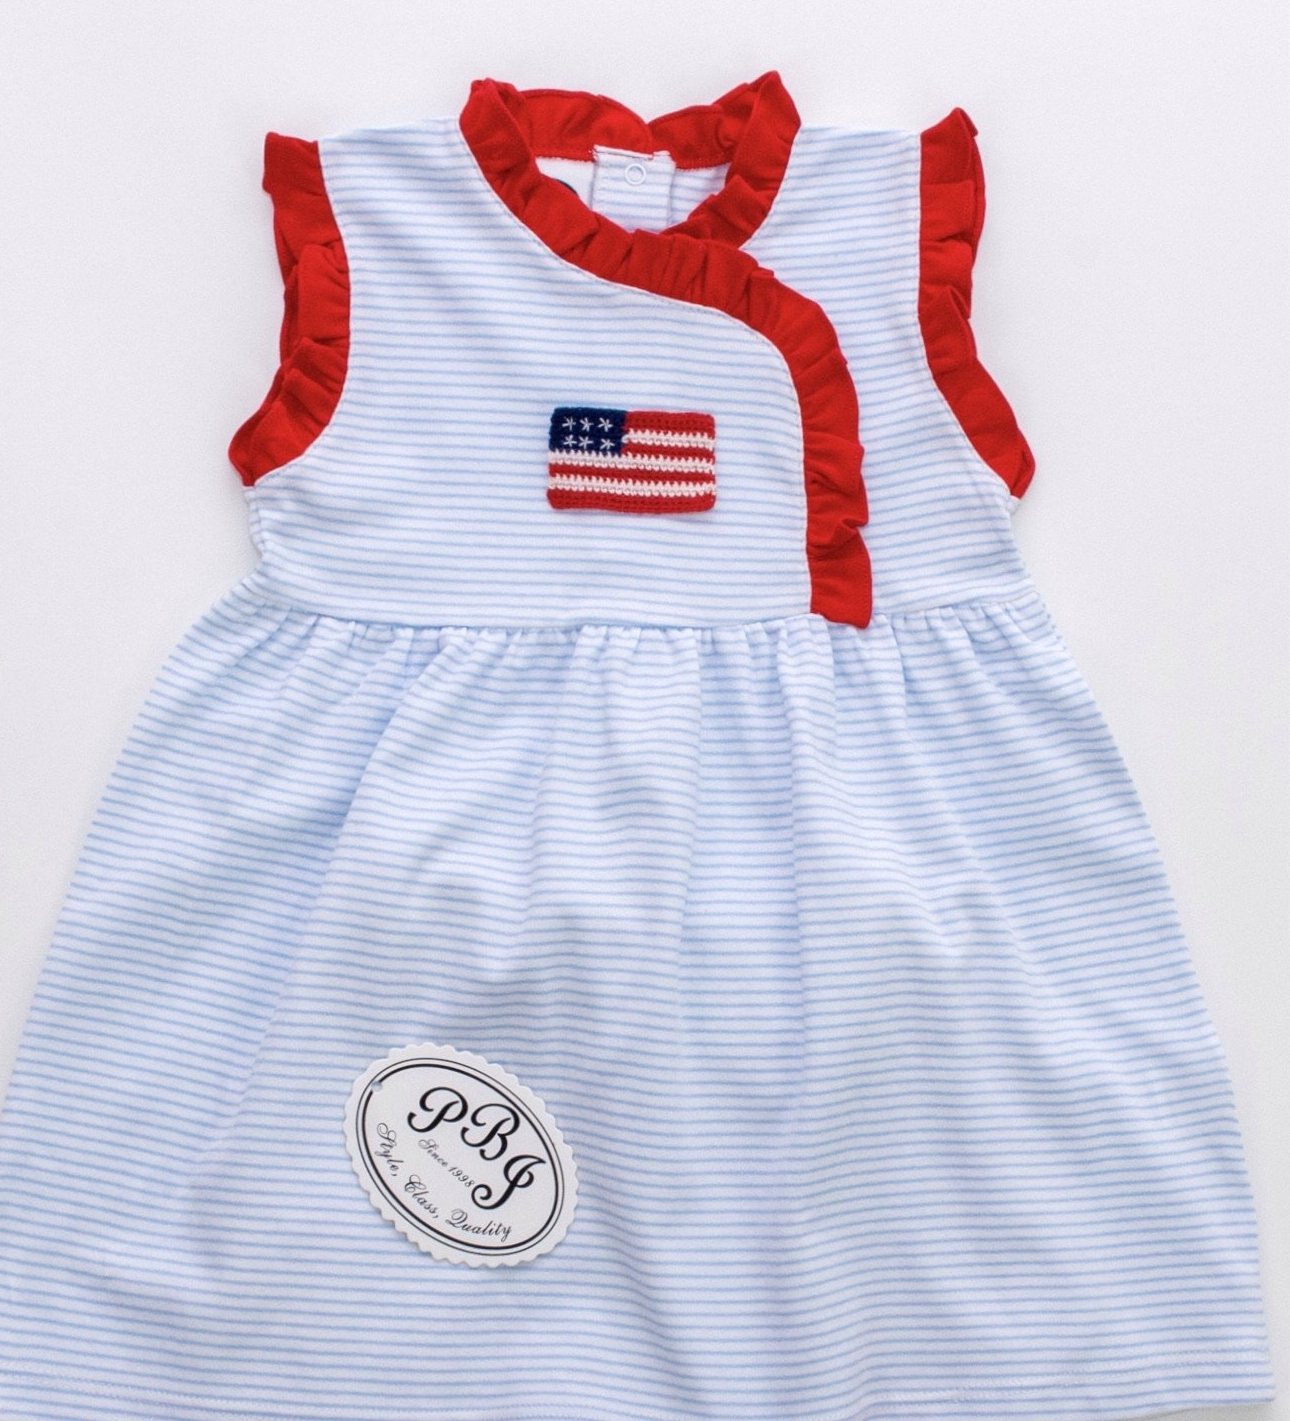 Pima Eloise Shorts set - blue stripes/ red